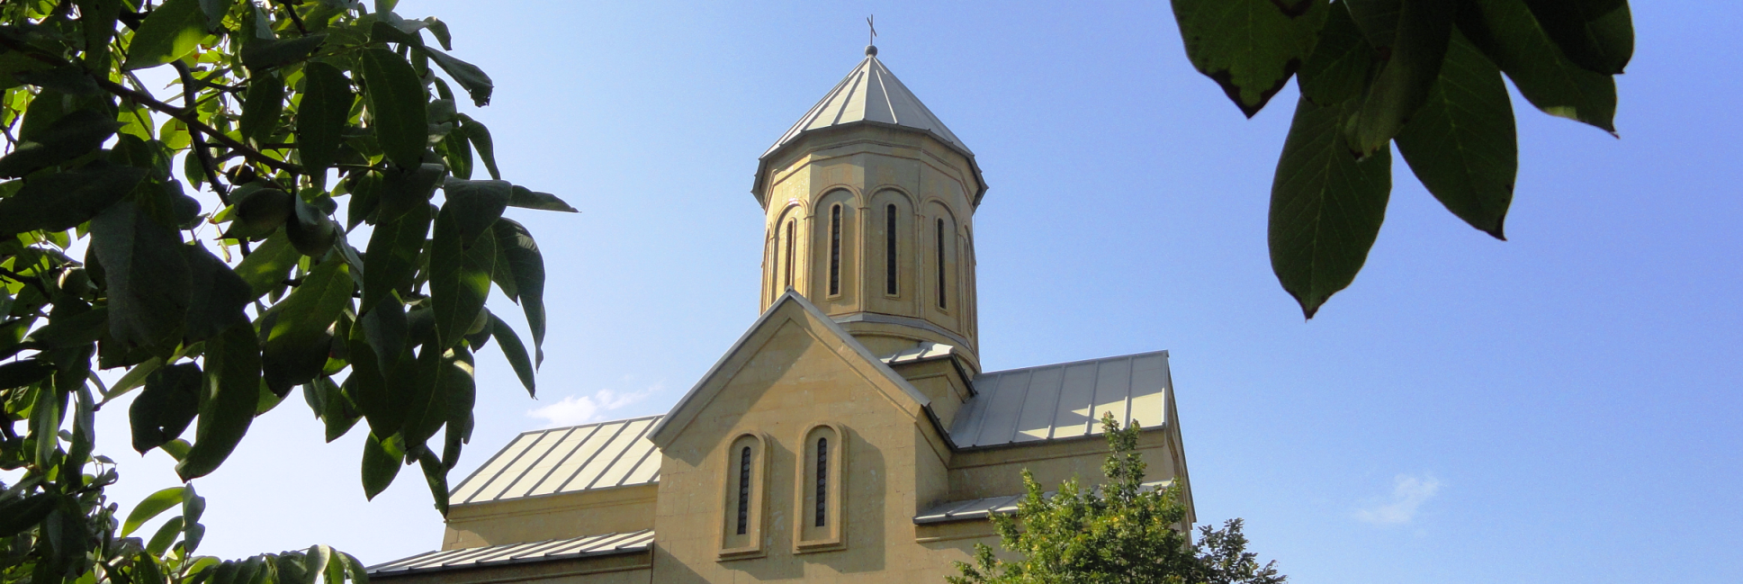 georgian church tbilisi